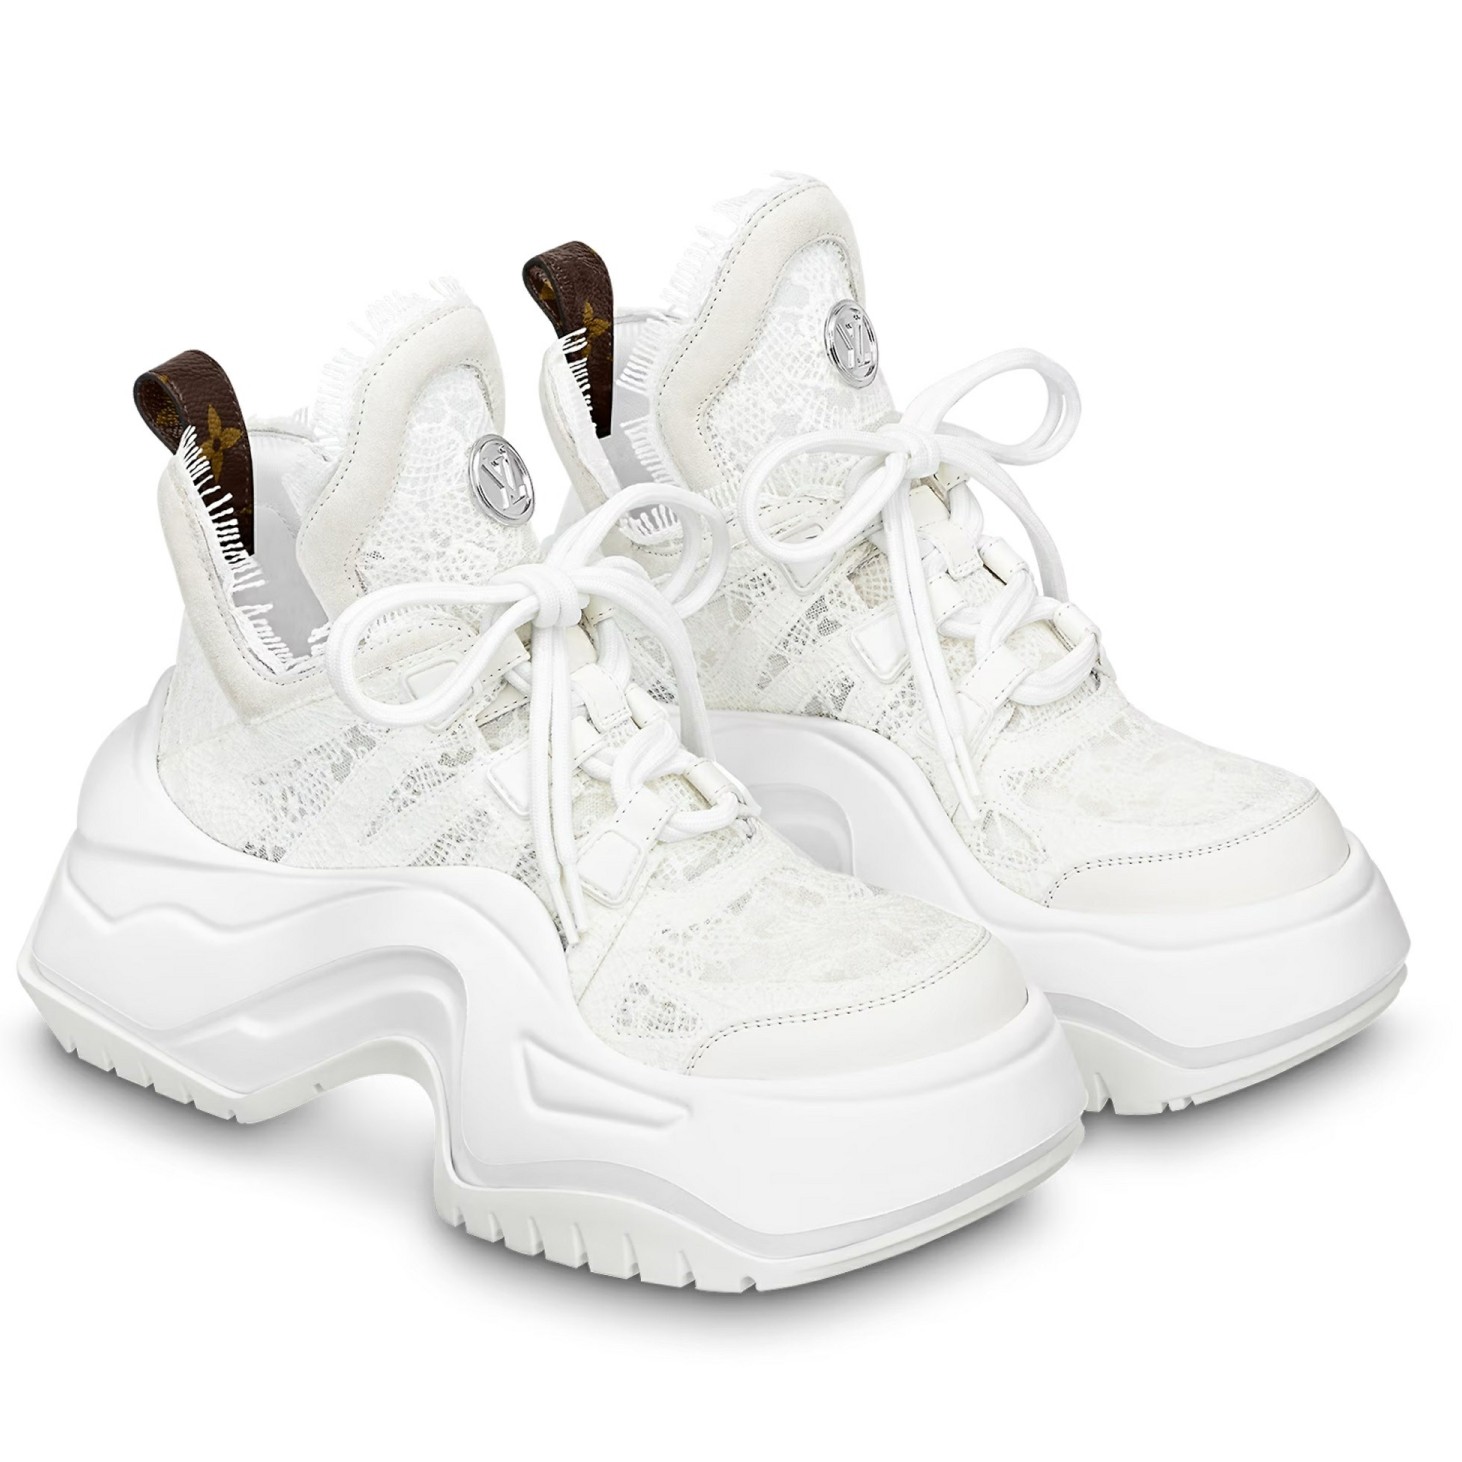 Louis Vuitton LV Archlight 2.0 Men's Platform Sneaker White. Size 08.0